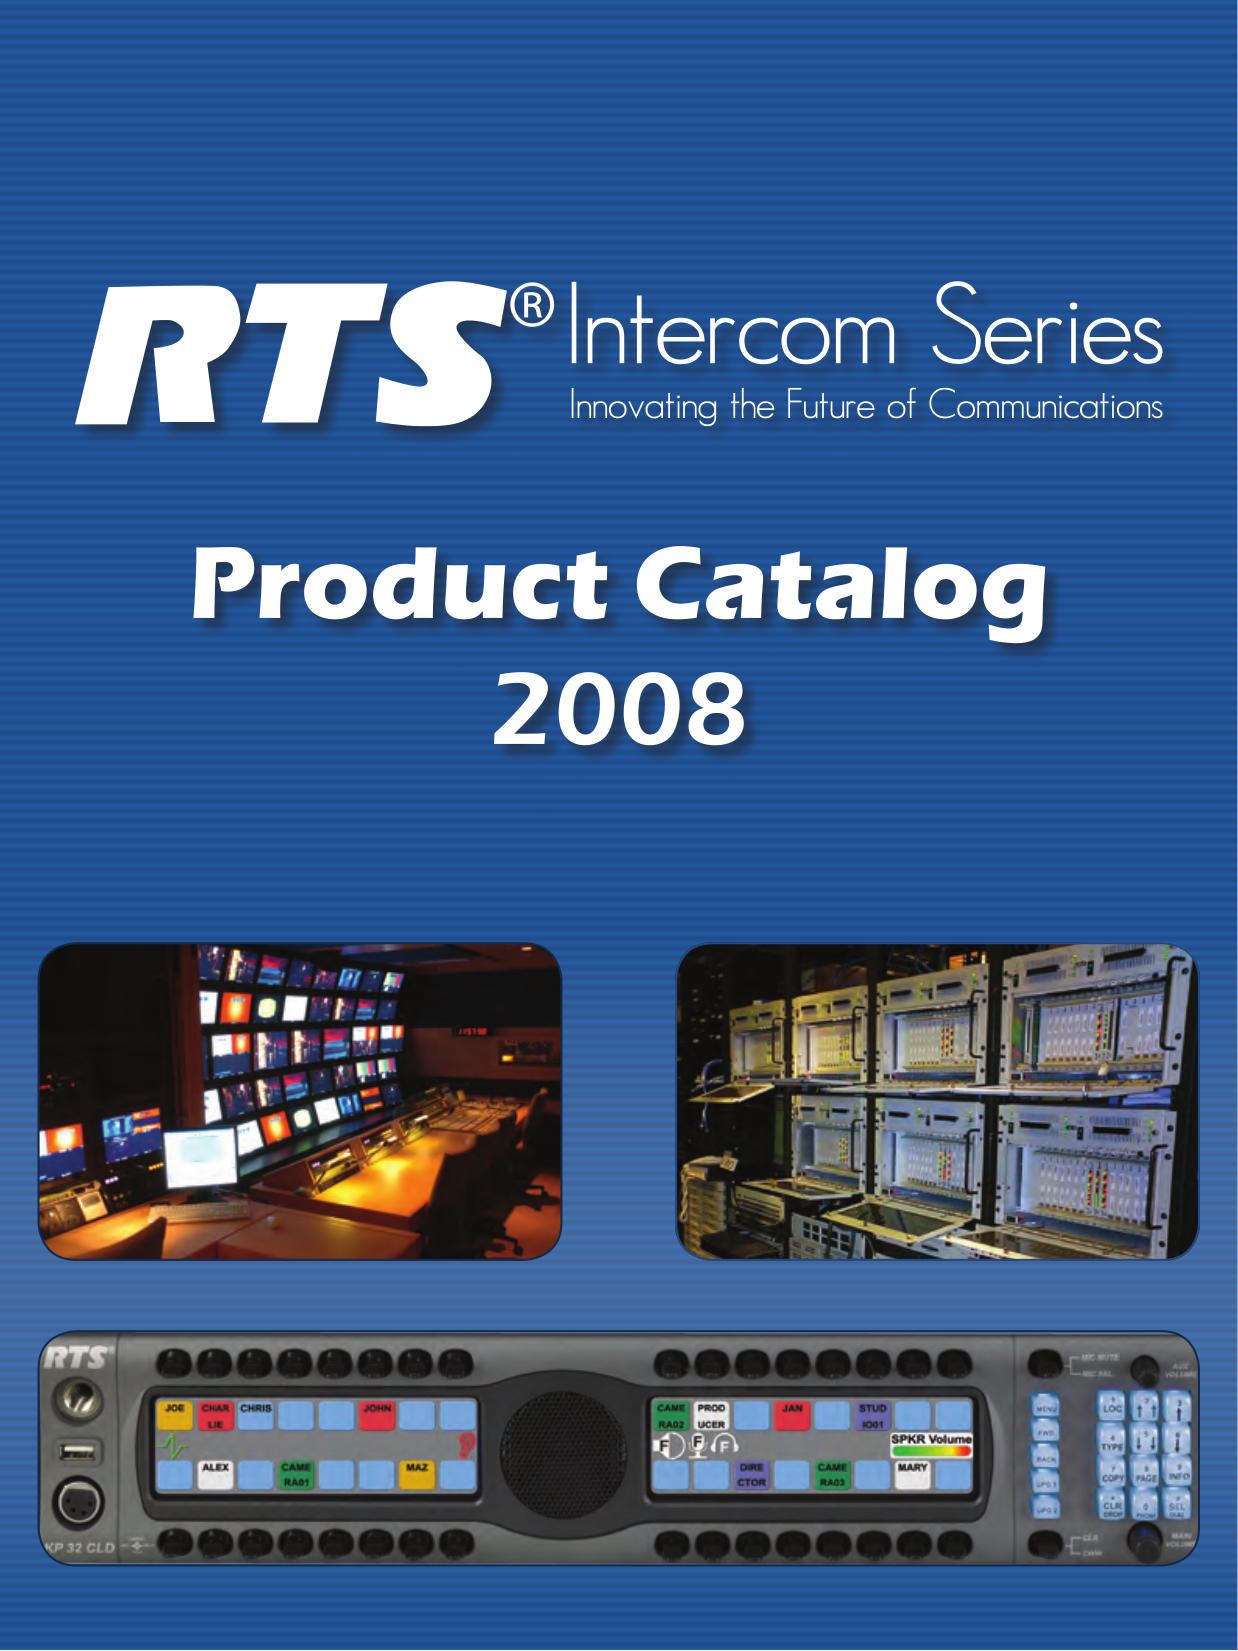 pdf for Telex Other XCP-16-DB9-T IntercomSystem manual